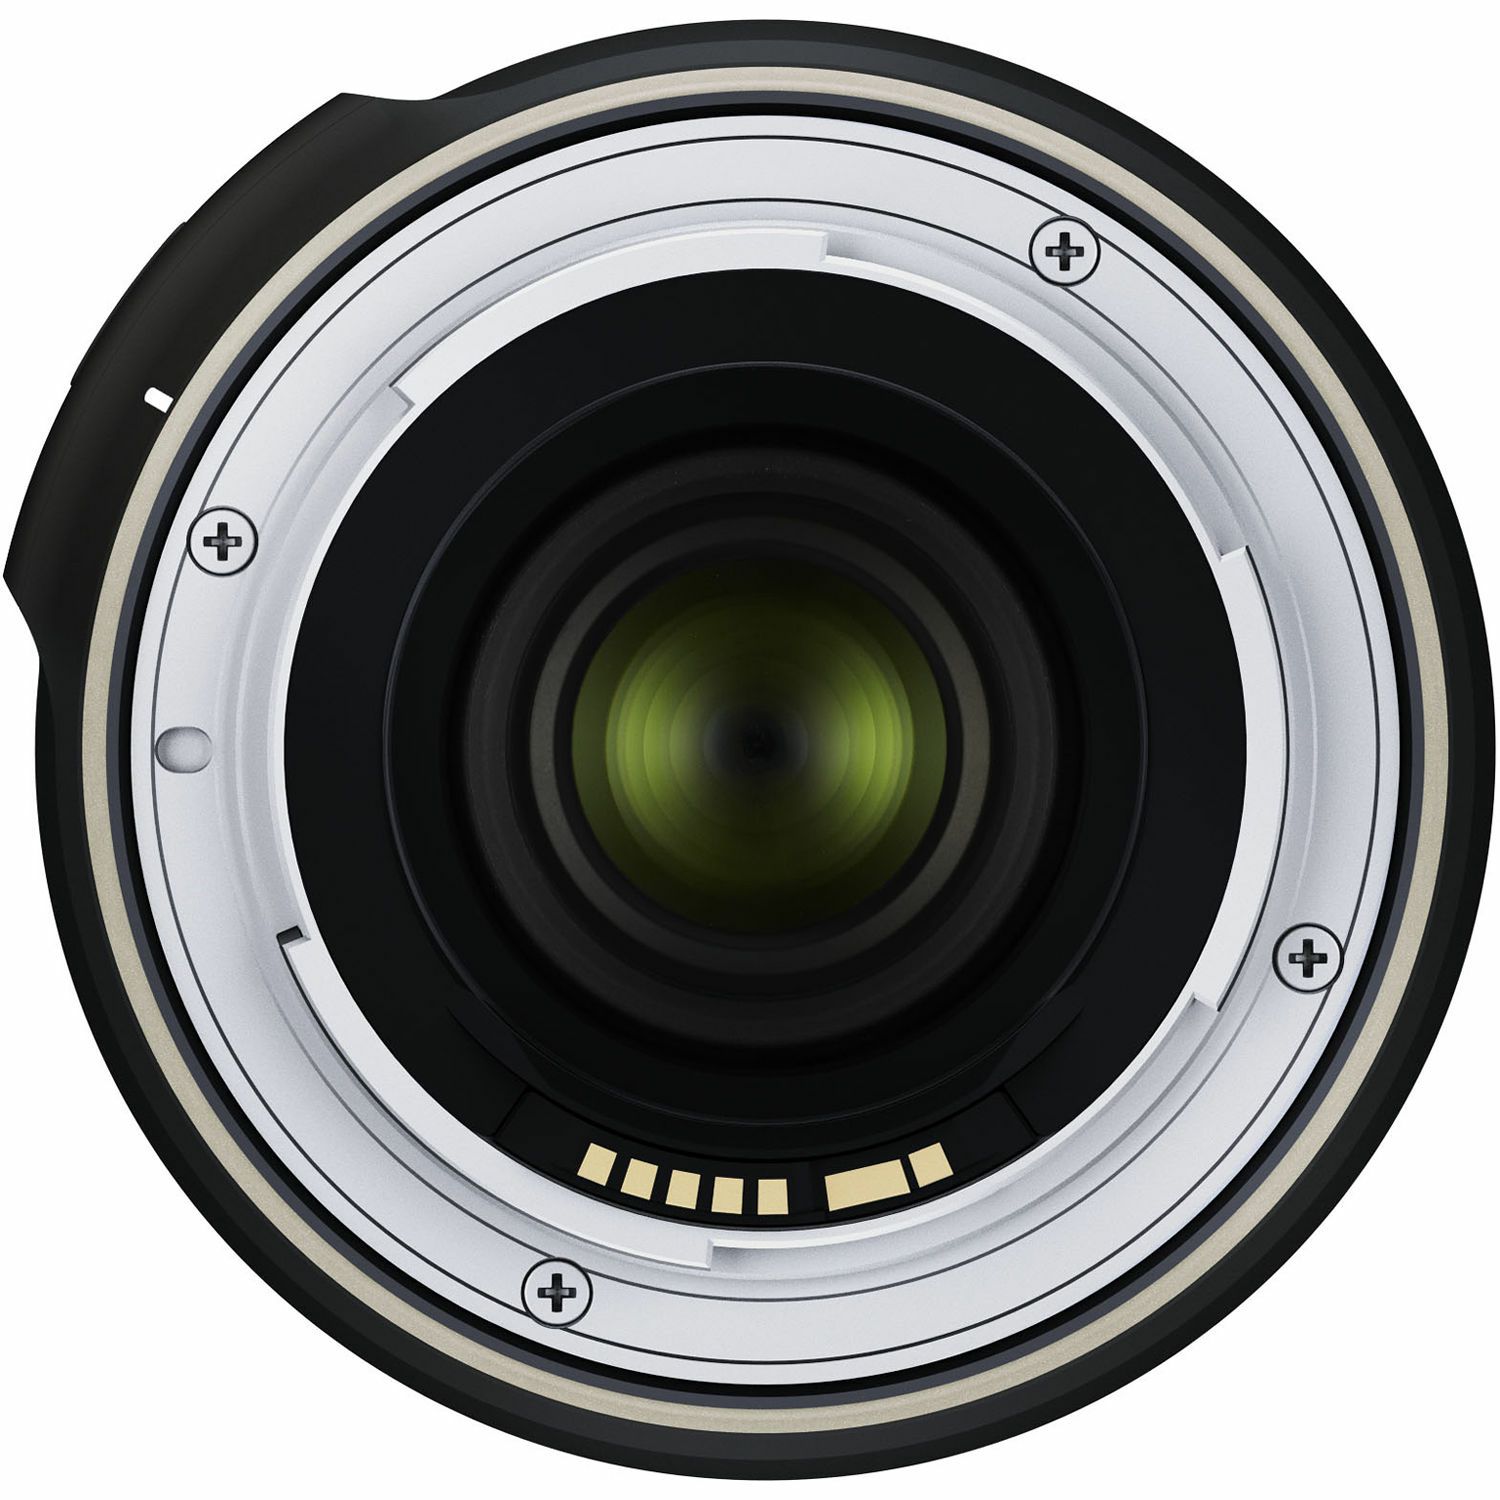 Tamron AF 17-35mm f/2.8-4 Di OSD širokokutni objektiv za Canon EF (A037E)